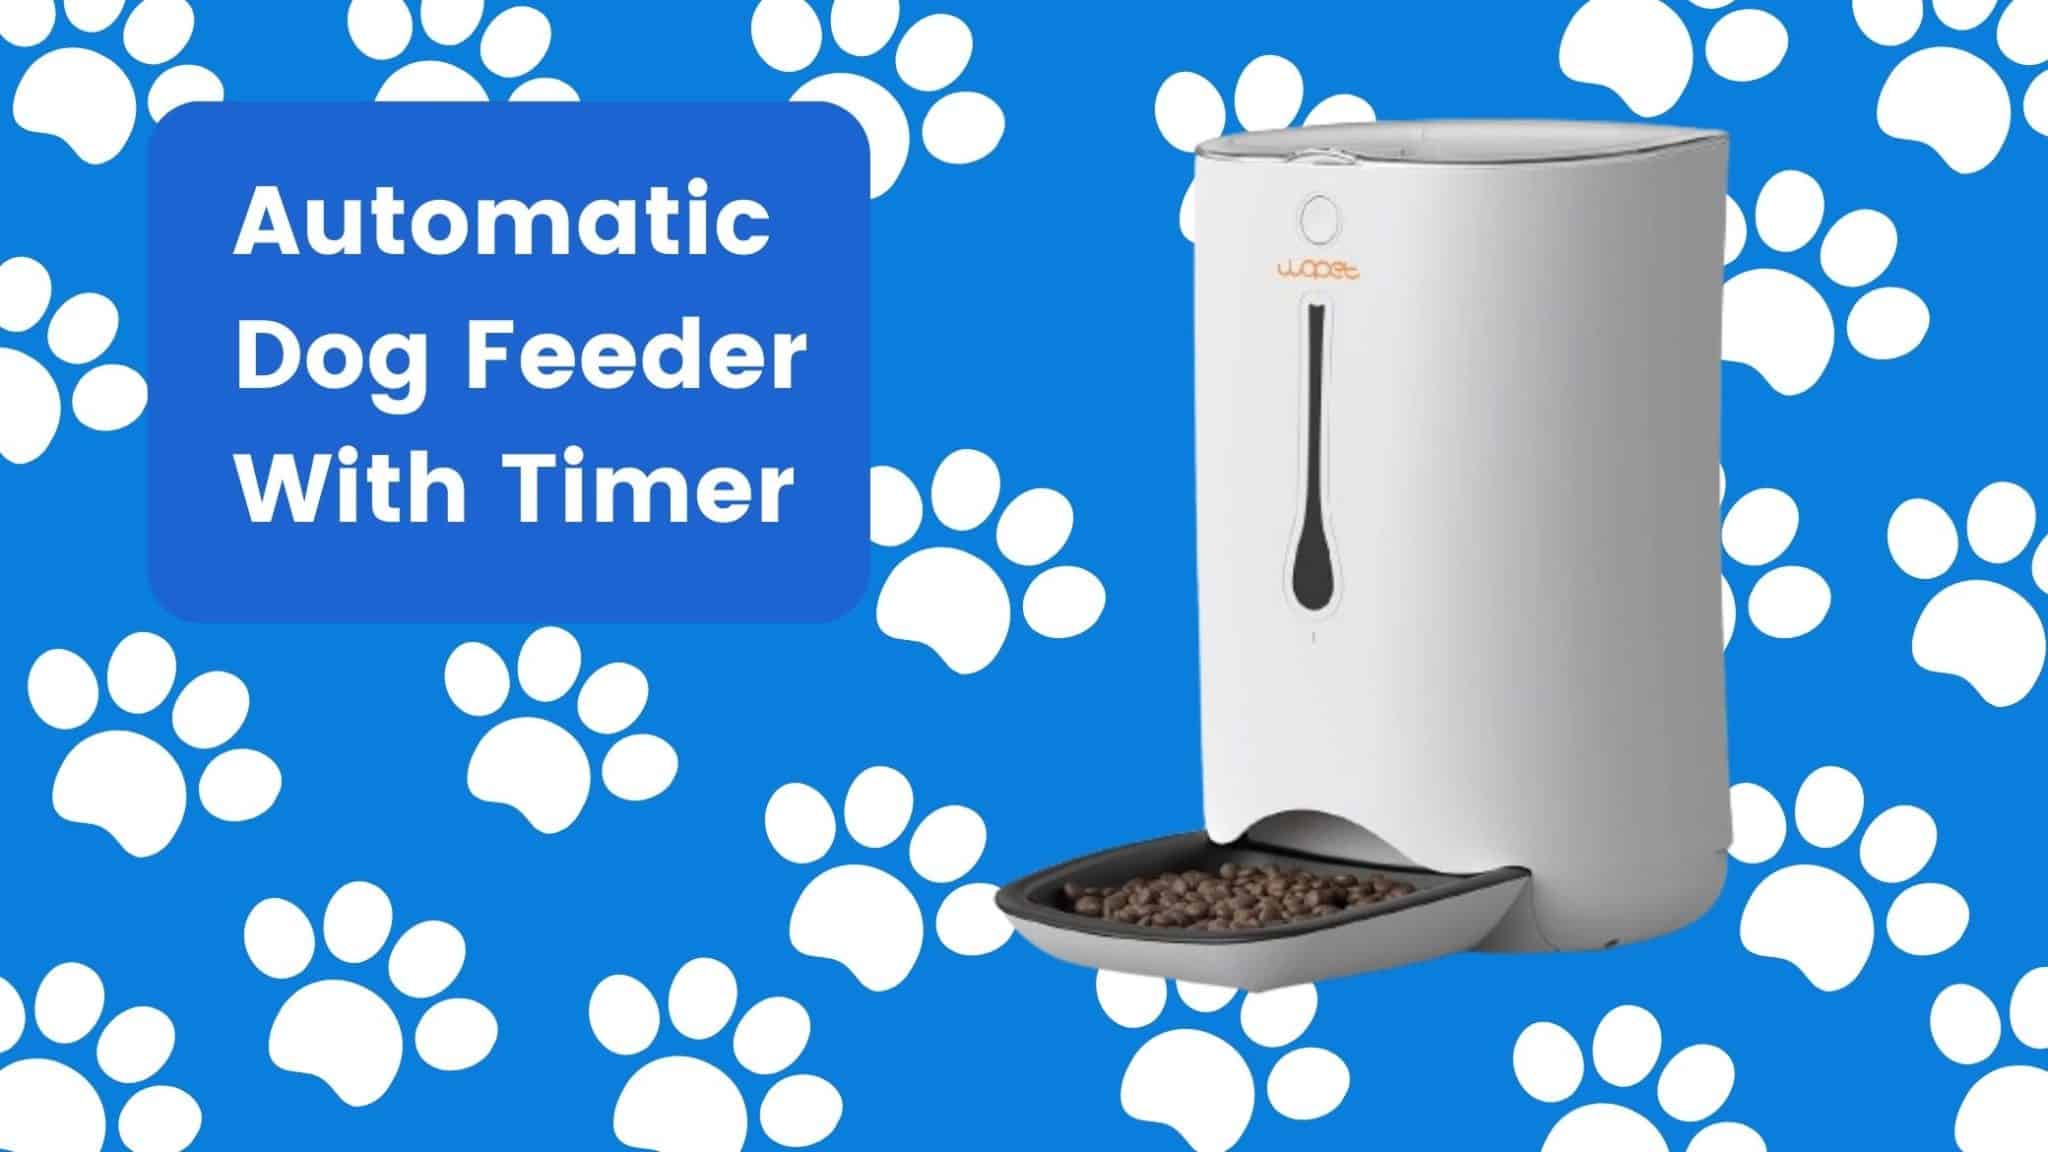 Automatic dog feeders